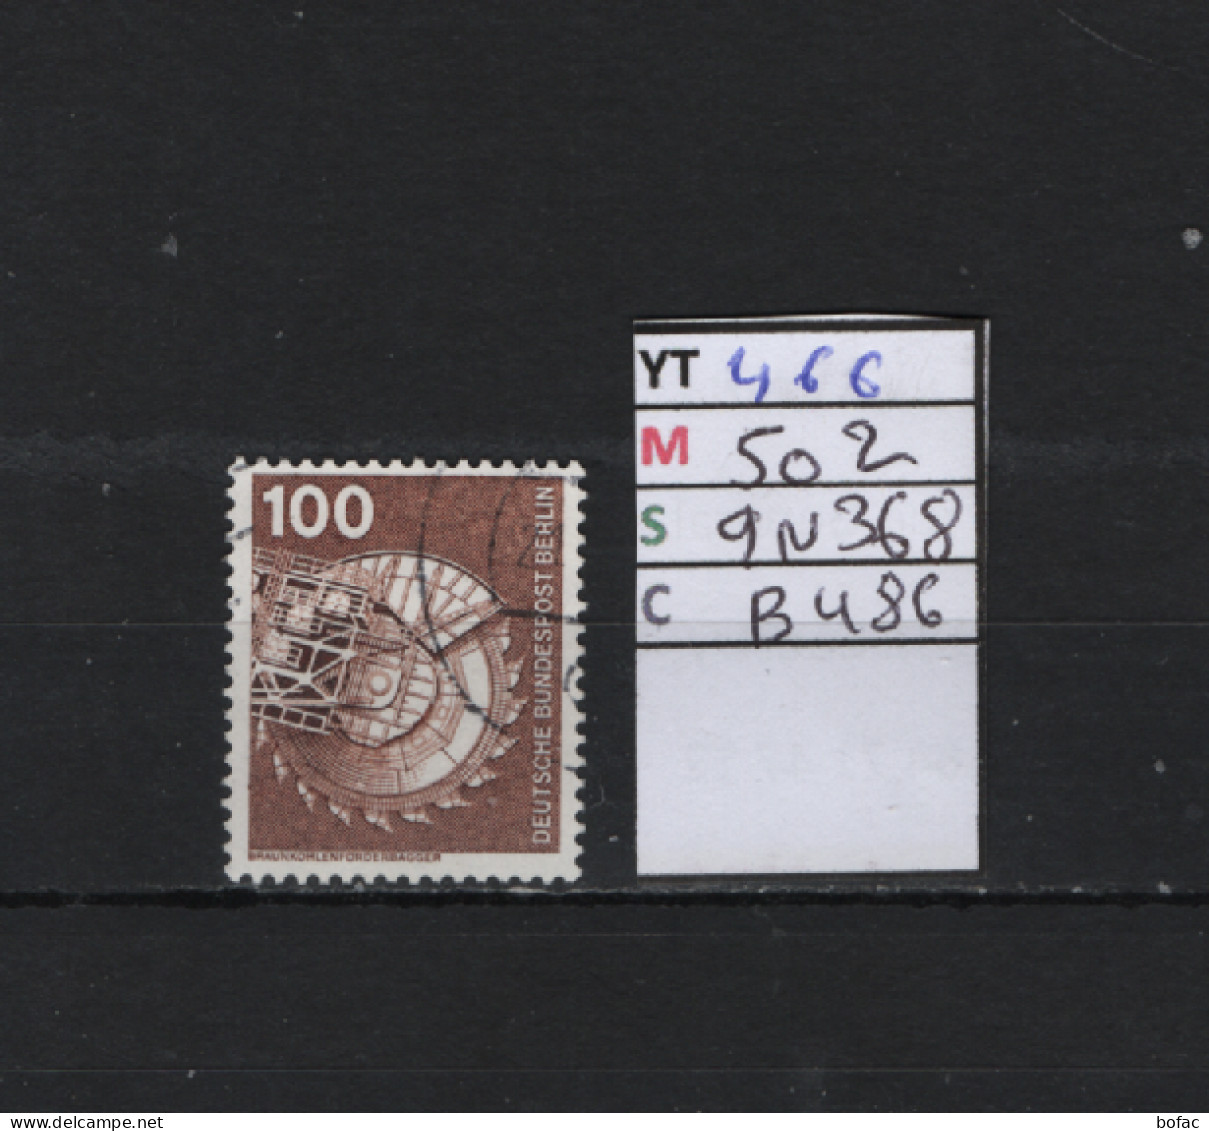 P. FIXE Obl 466 YT 502 MIC 9N368 SCO B486 GIB Excavateur Industrie Et Technique 1975 1976 *Berlin* 75/03 - Used Stamps